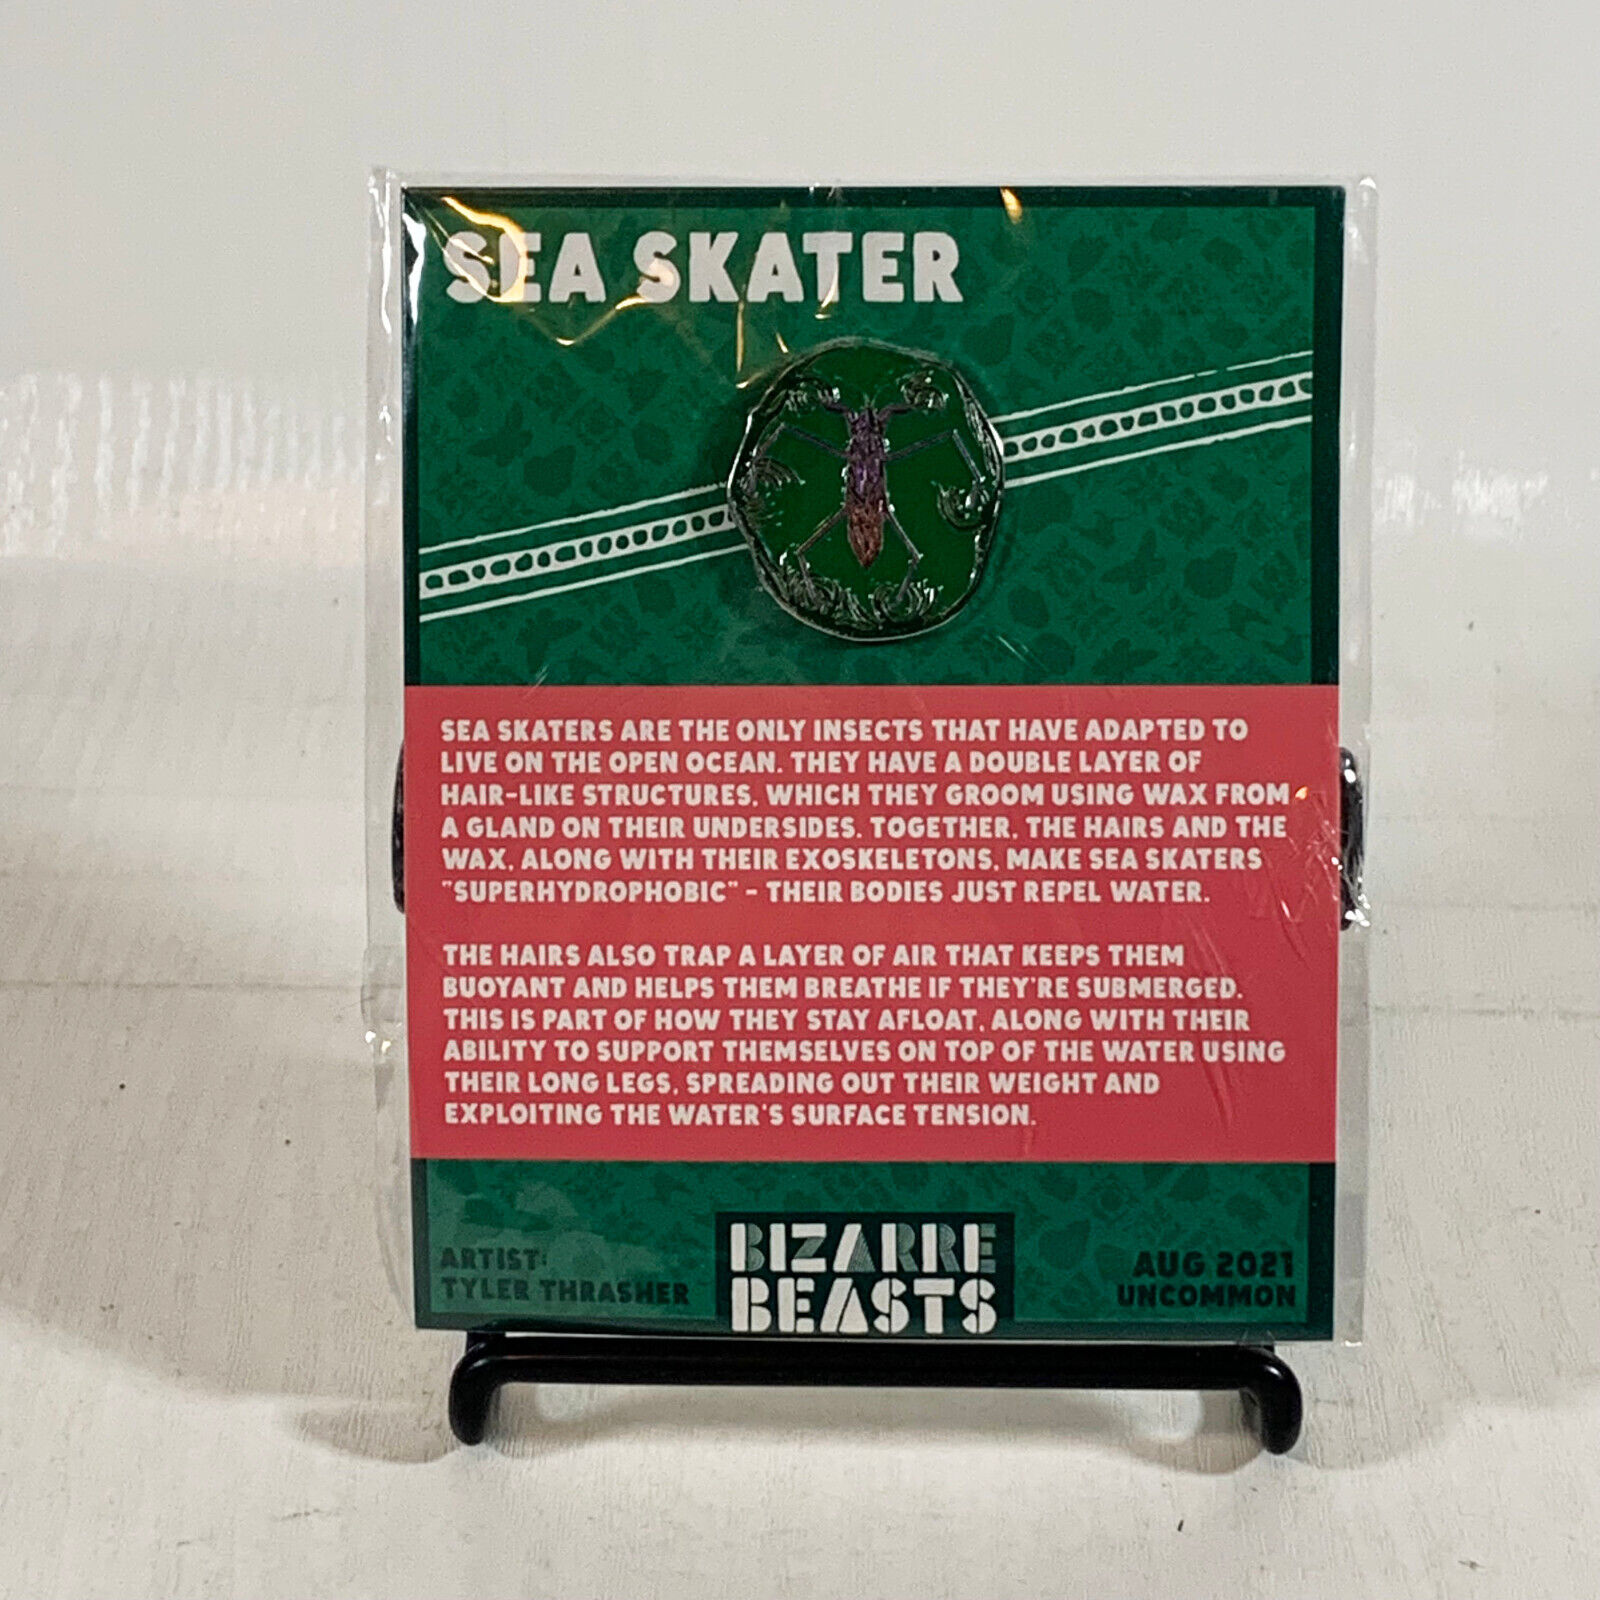 DFTBA Bizarre Beasts Enamel Pin - Sea Skater, Aug 2021 Uncommon